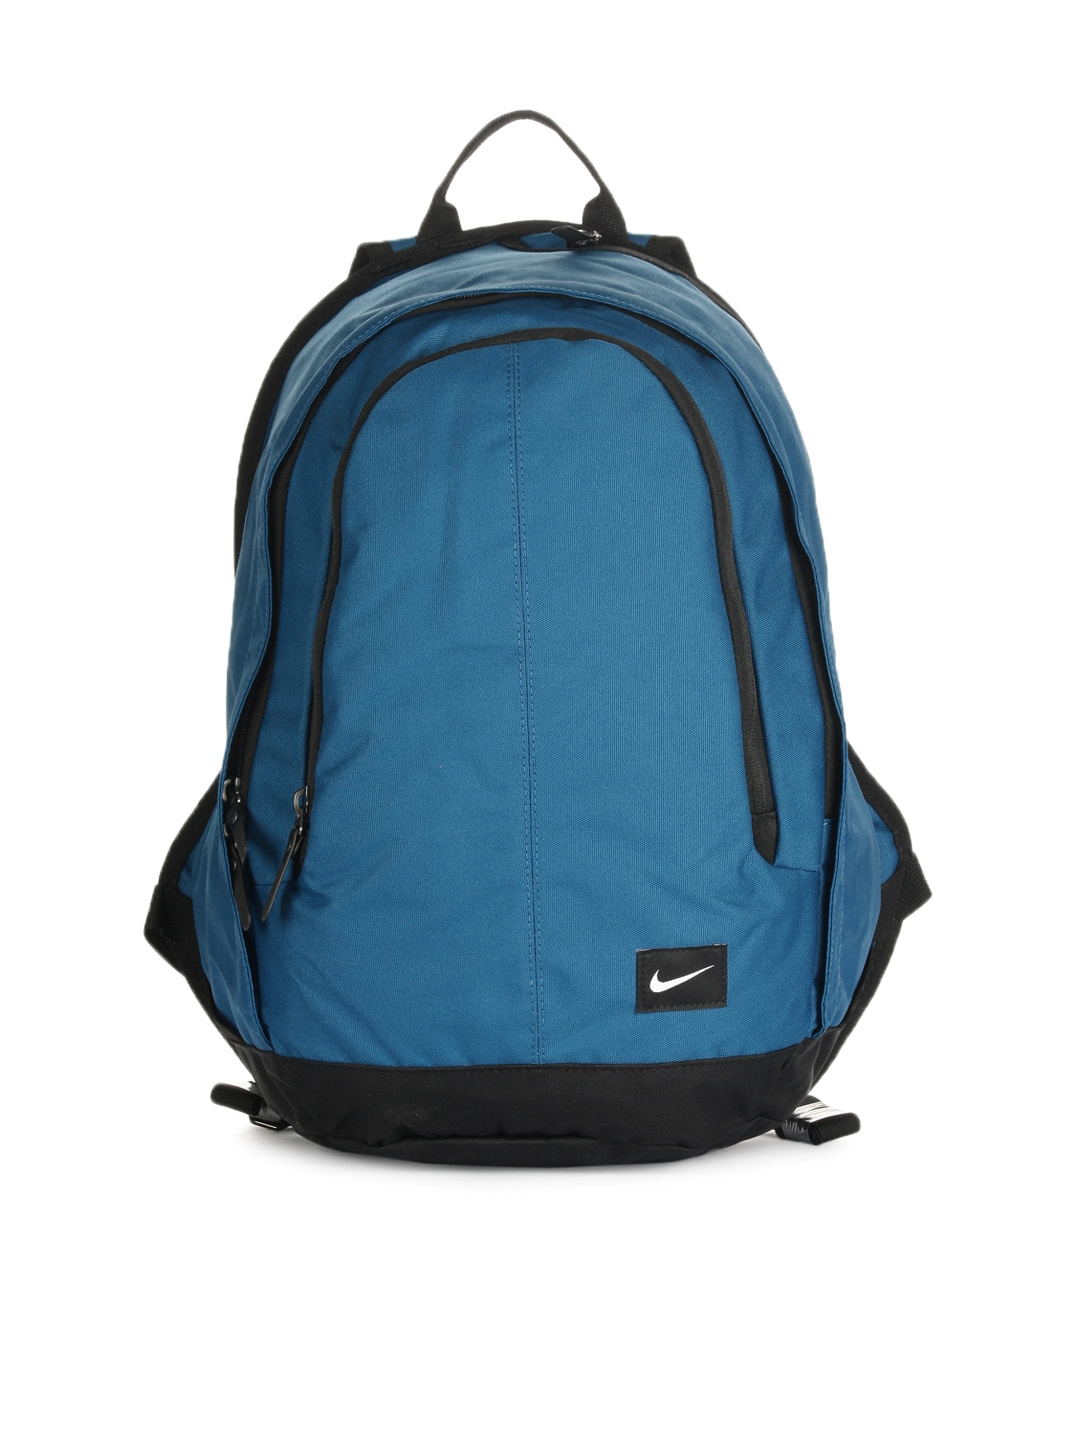 Nike Unisex Casual Teal Blue Backpack